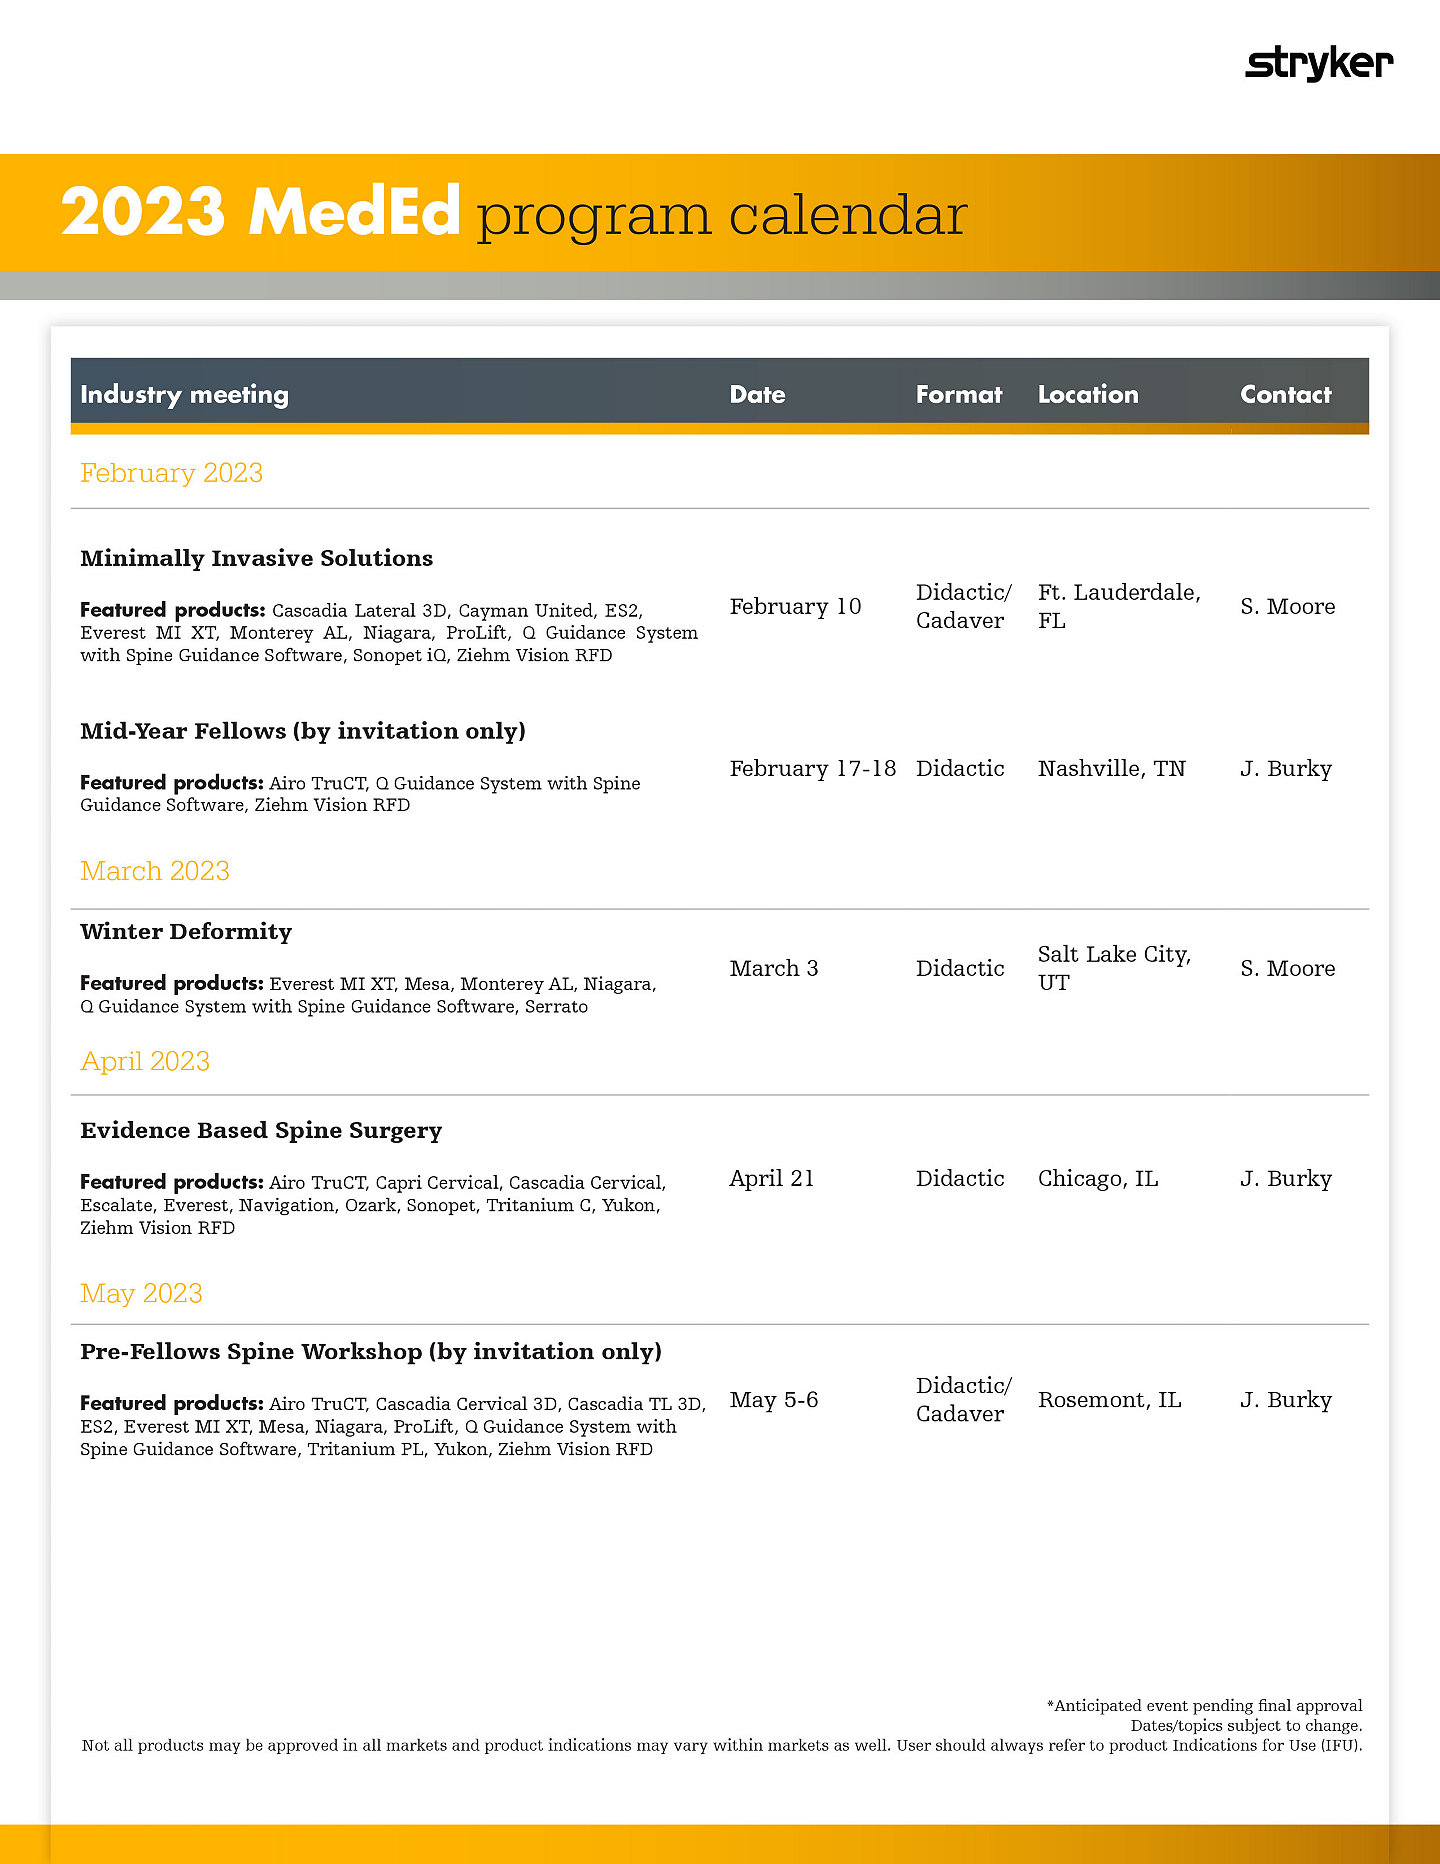 2023 MedEd Program Calendar - no reg-1